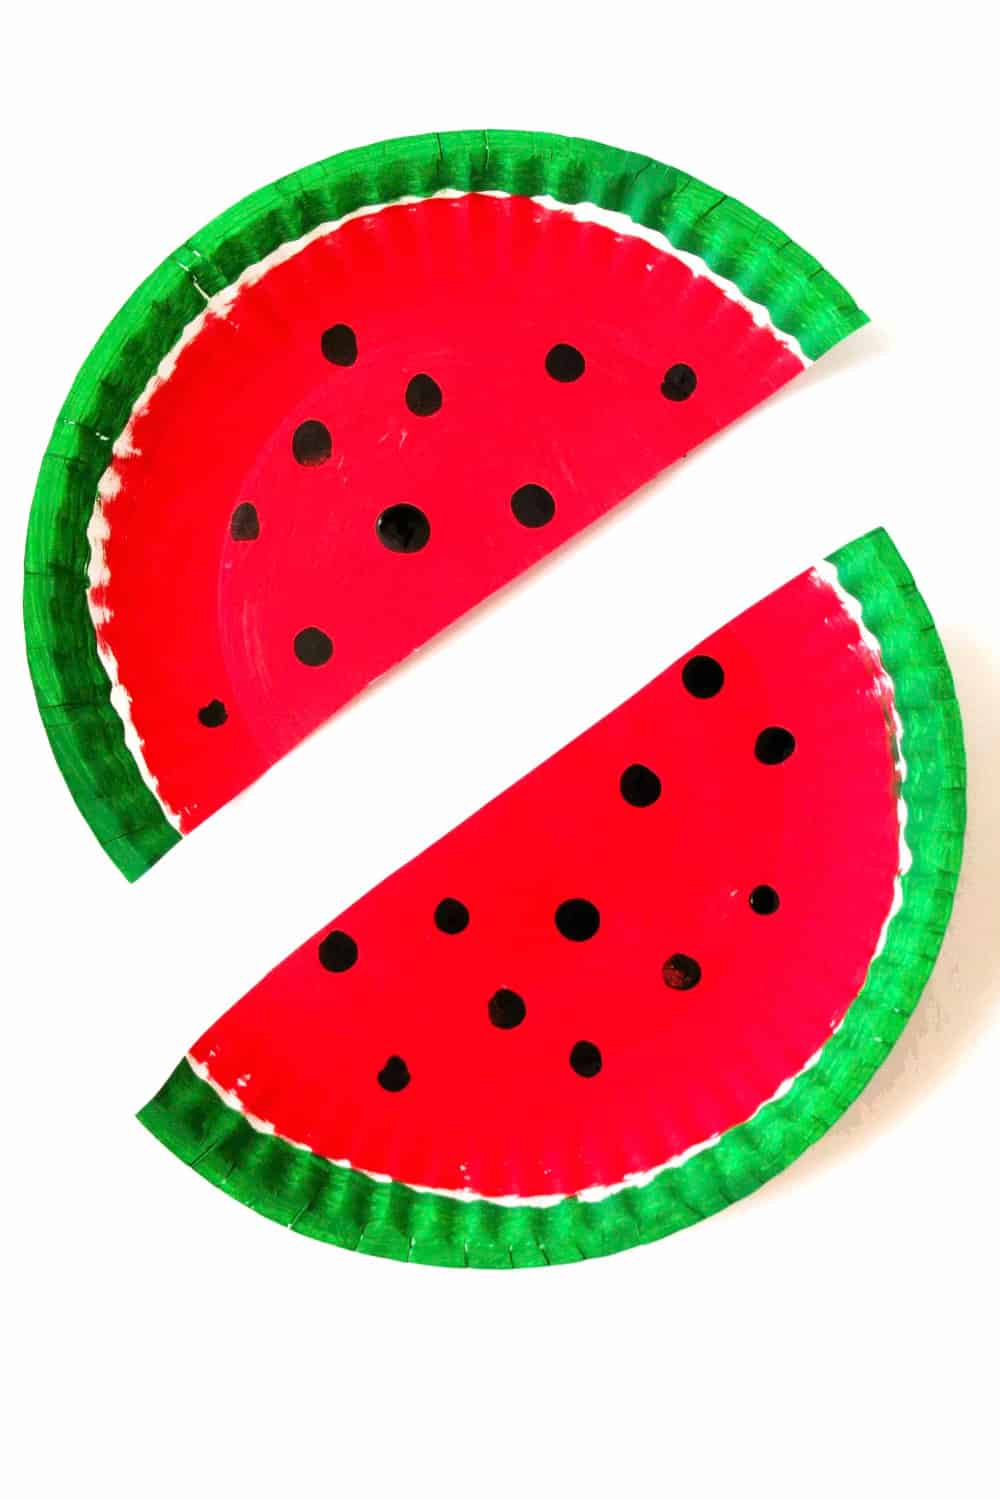 watermelon craft preschool